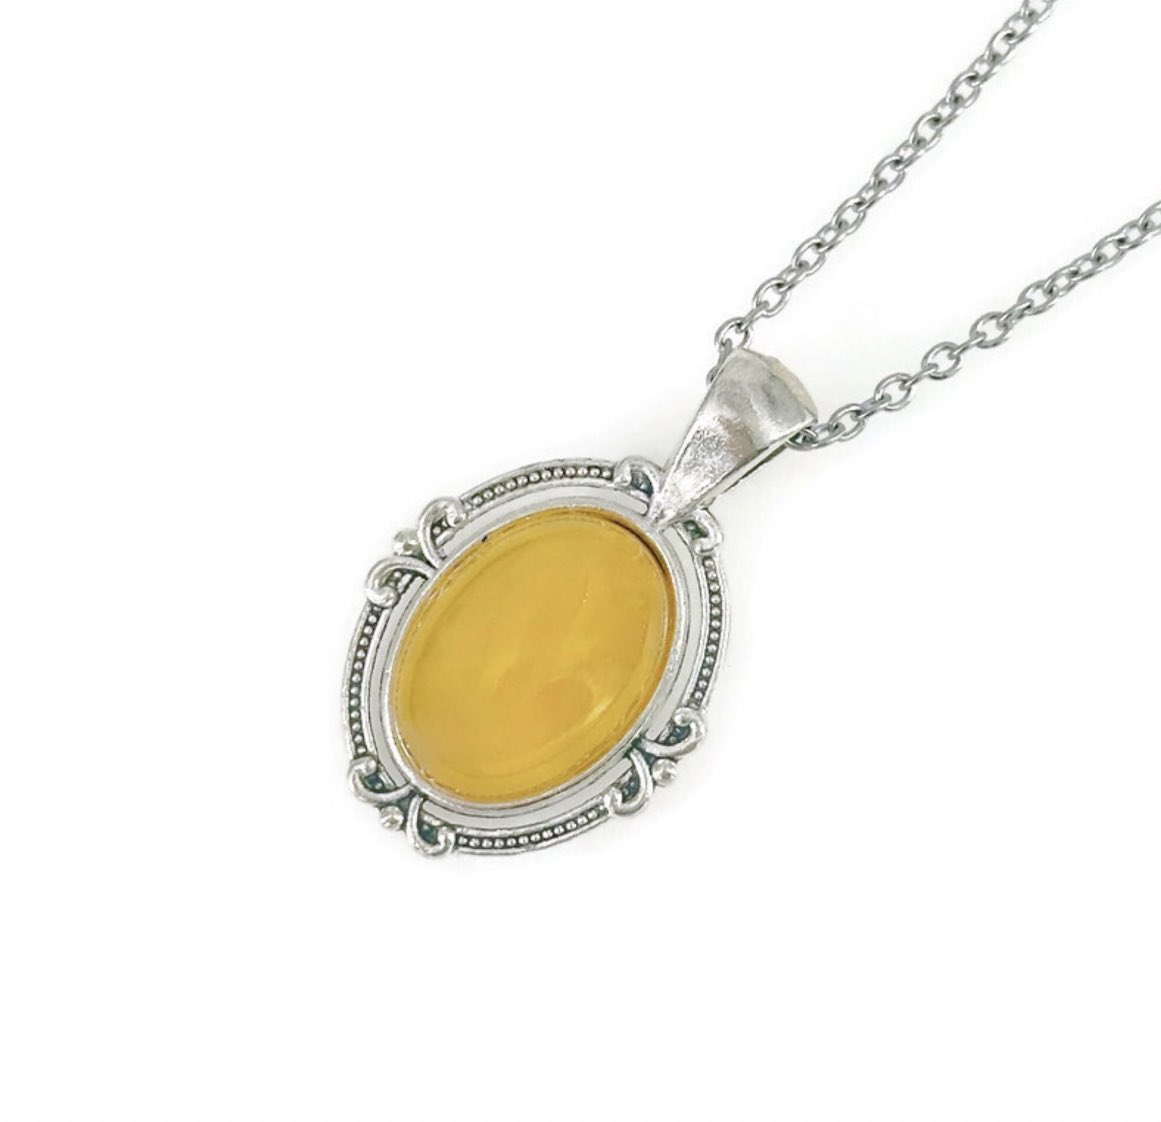 Yellow jade pendant #handmade #jewelry #shopsmall #gift #jade zaverdesigns.etsy.com/listing/126999…